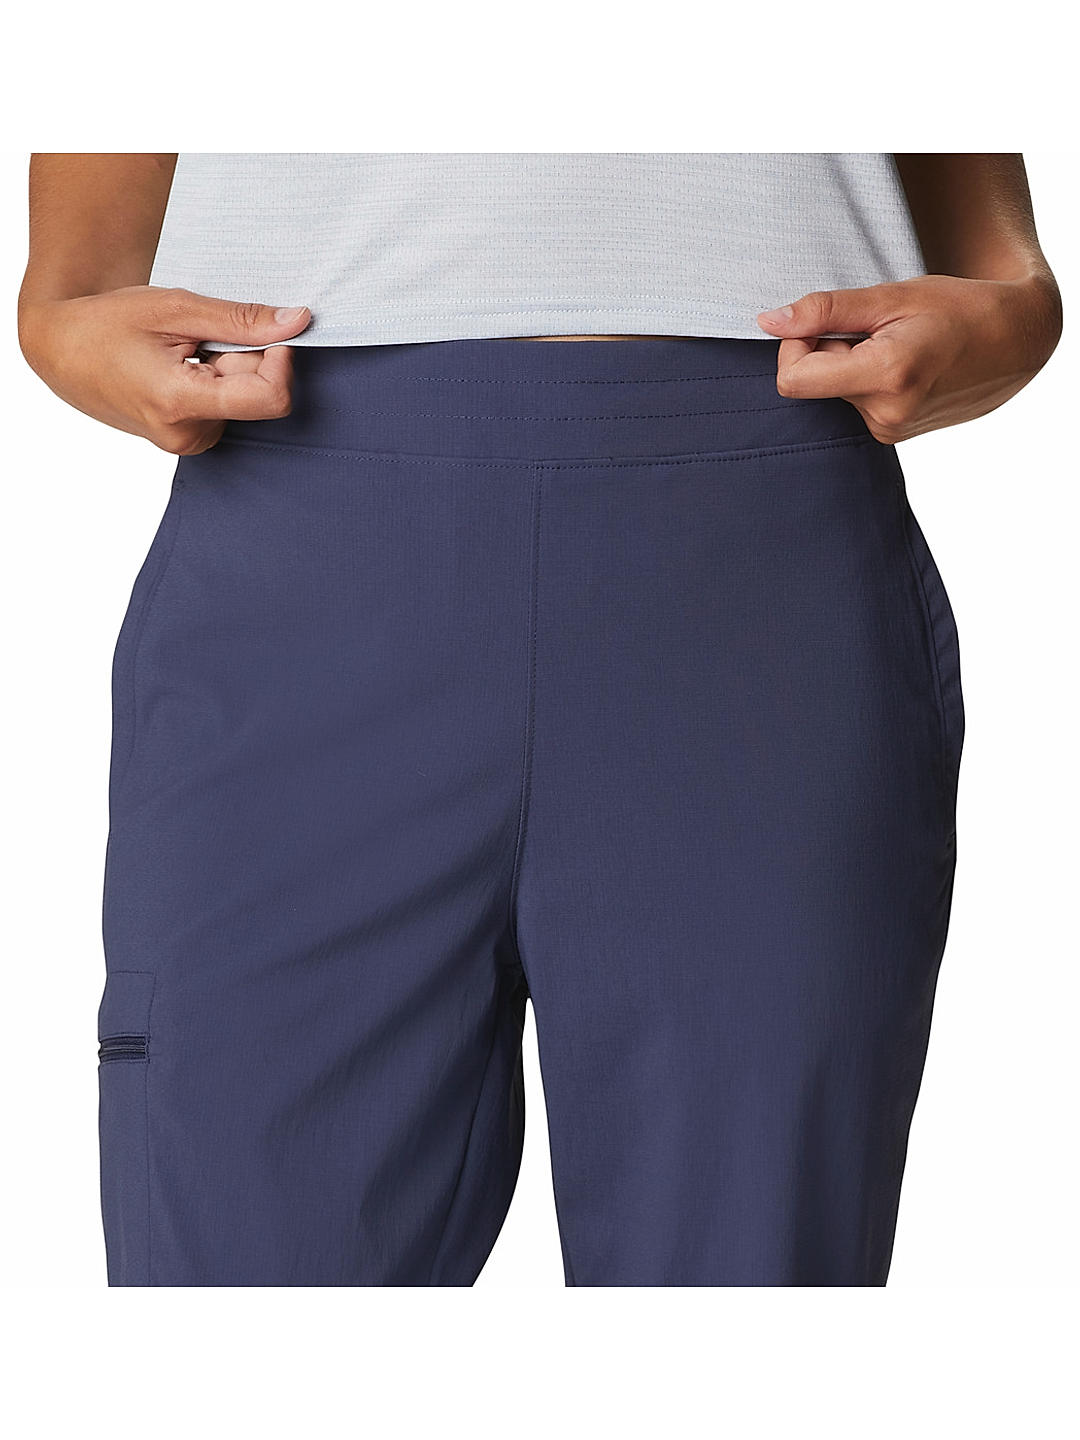 ANKOMINA Women Athletic Pants with Pocket Sport Joggers Pants India